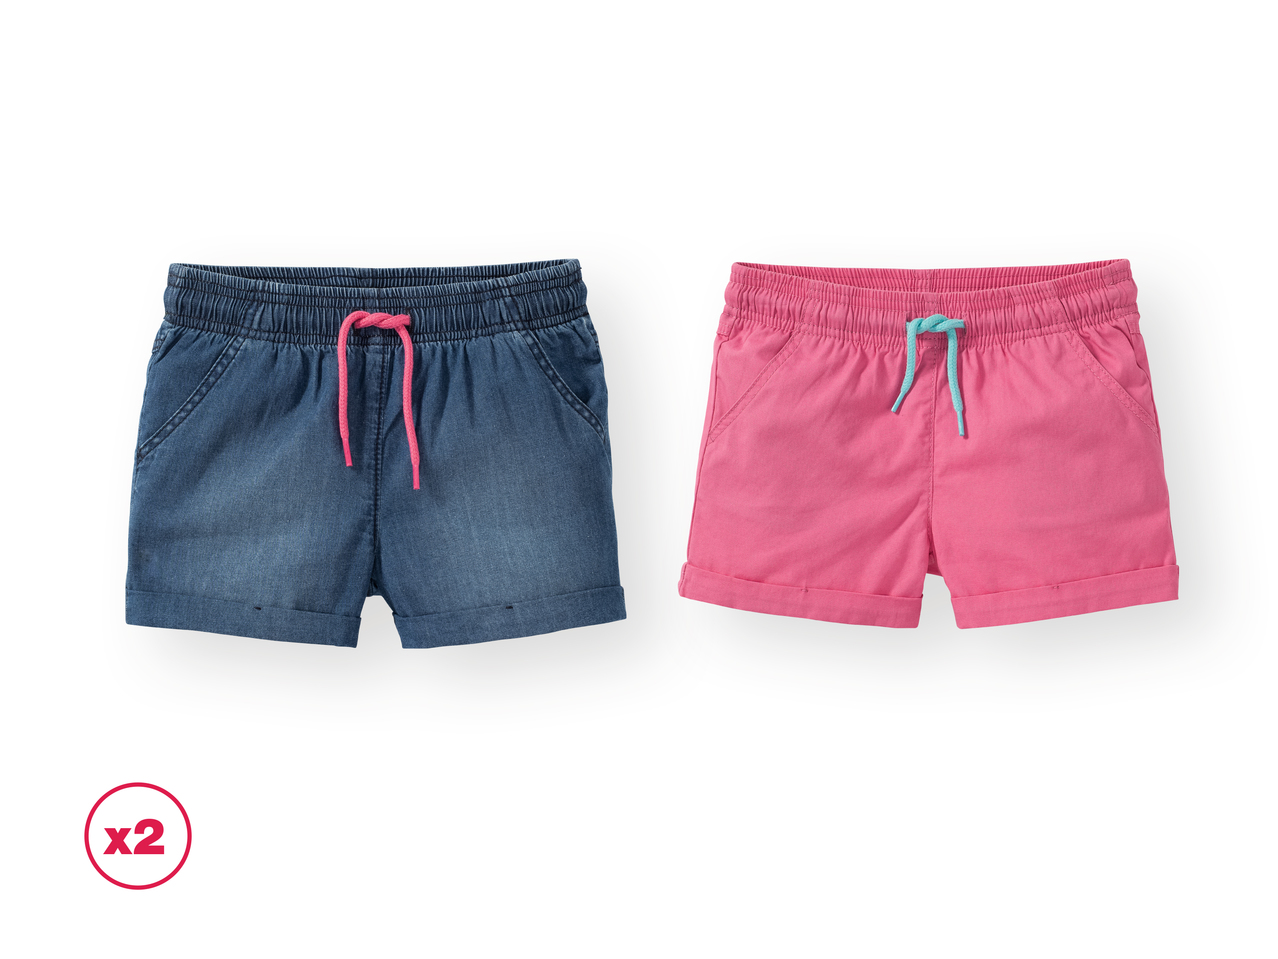 'Lupilu(R)' Pantalones cortos niños colores pastel pack 2 100% algodón